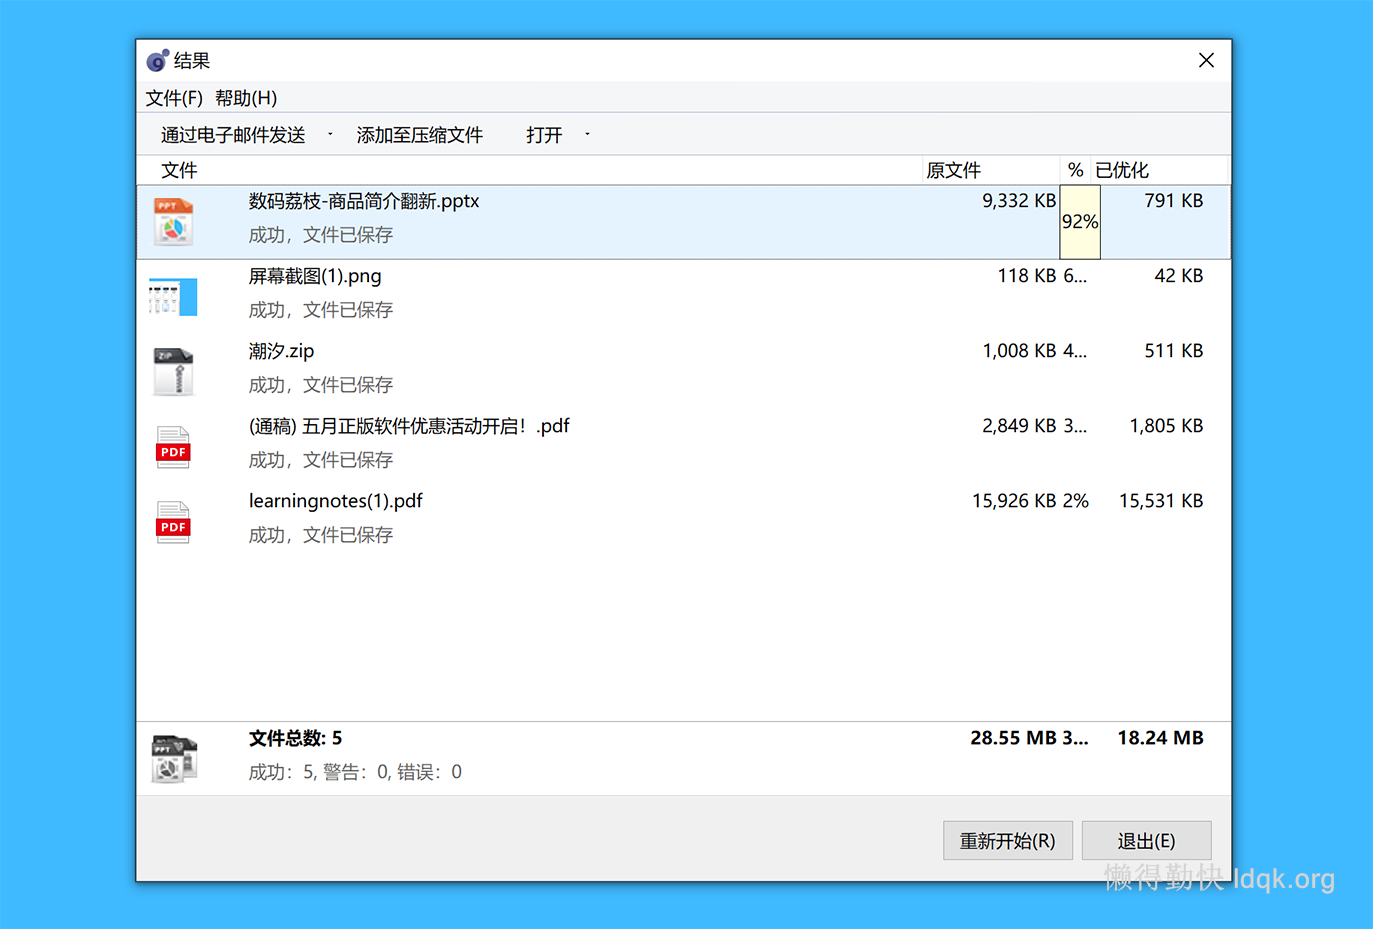 for mac instal NXPowerLite Desktop 10.0.1